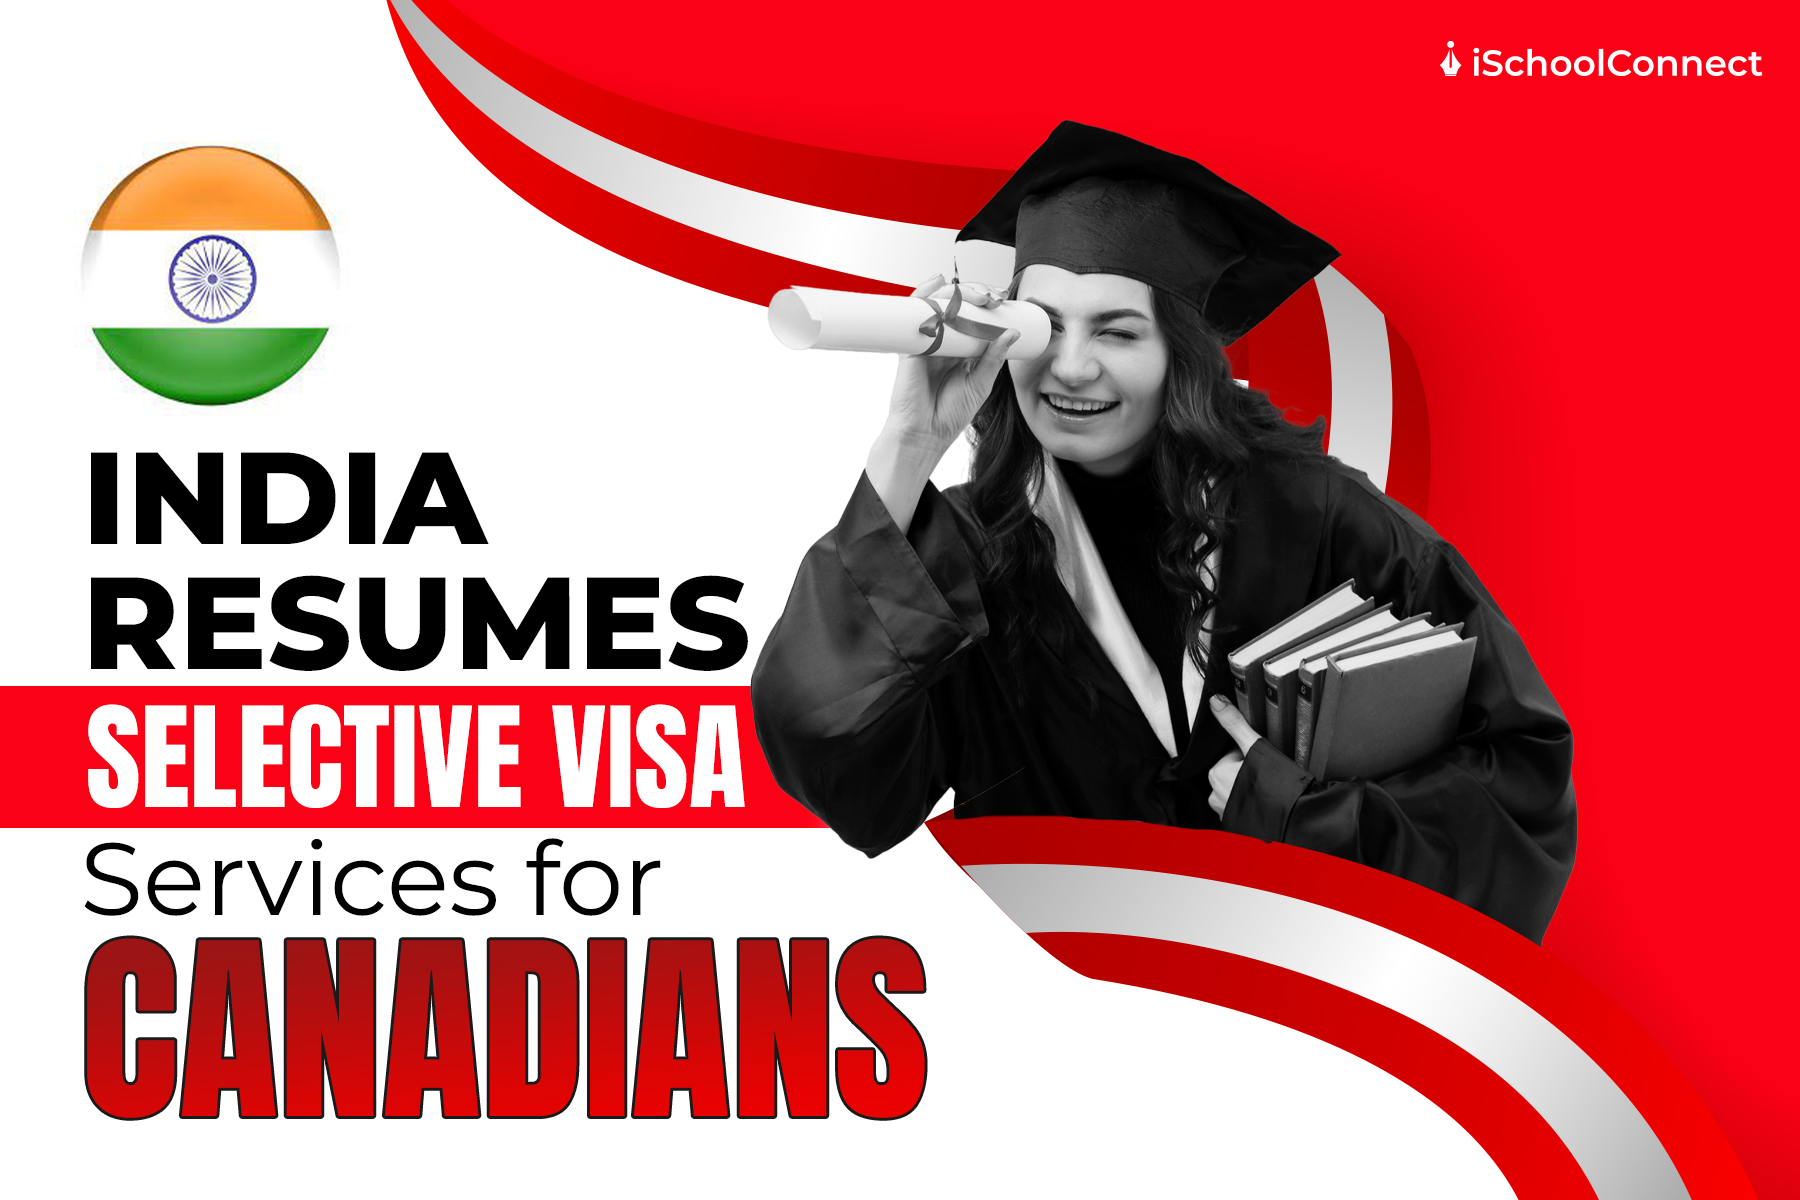 Visa Services for Canadians